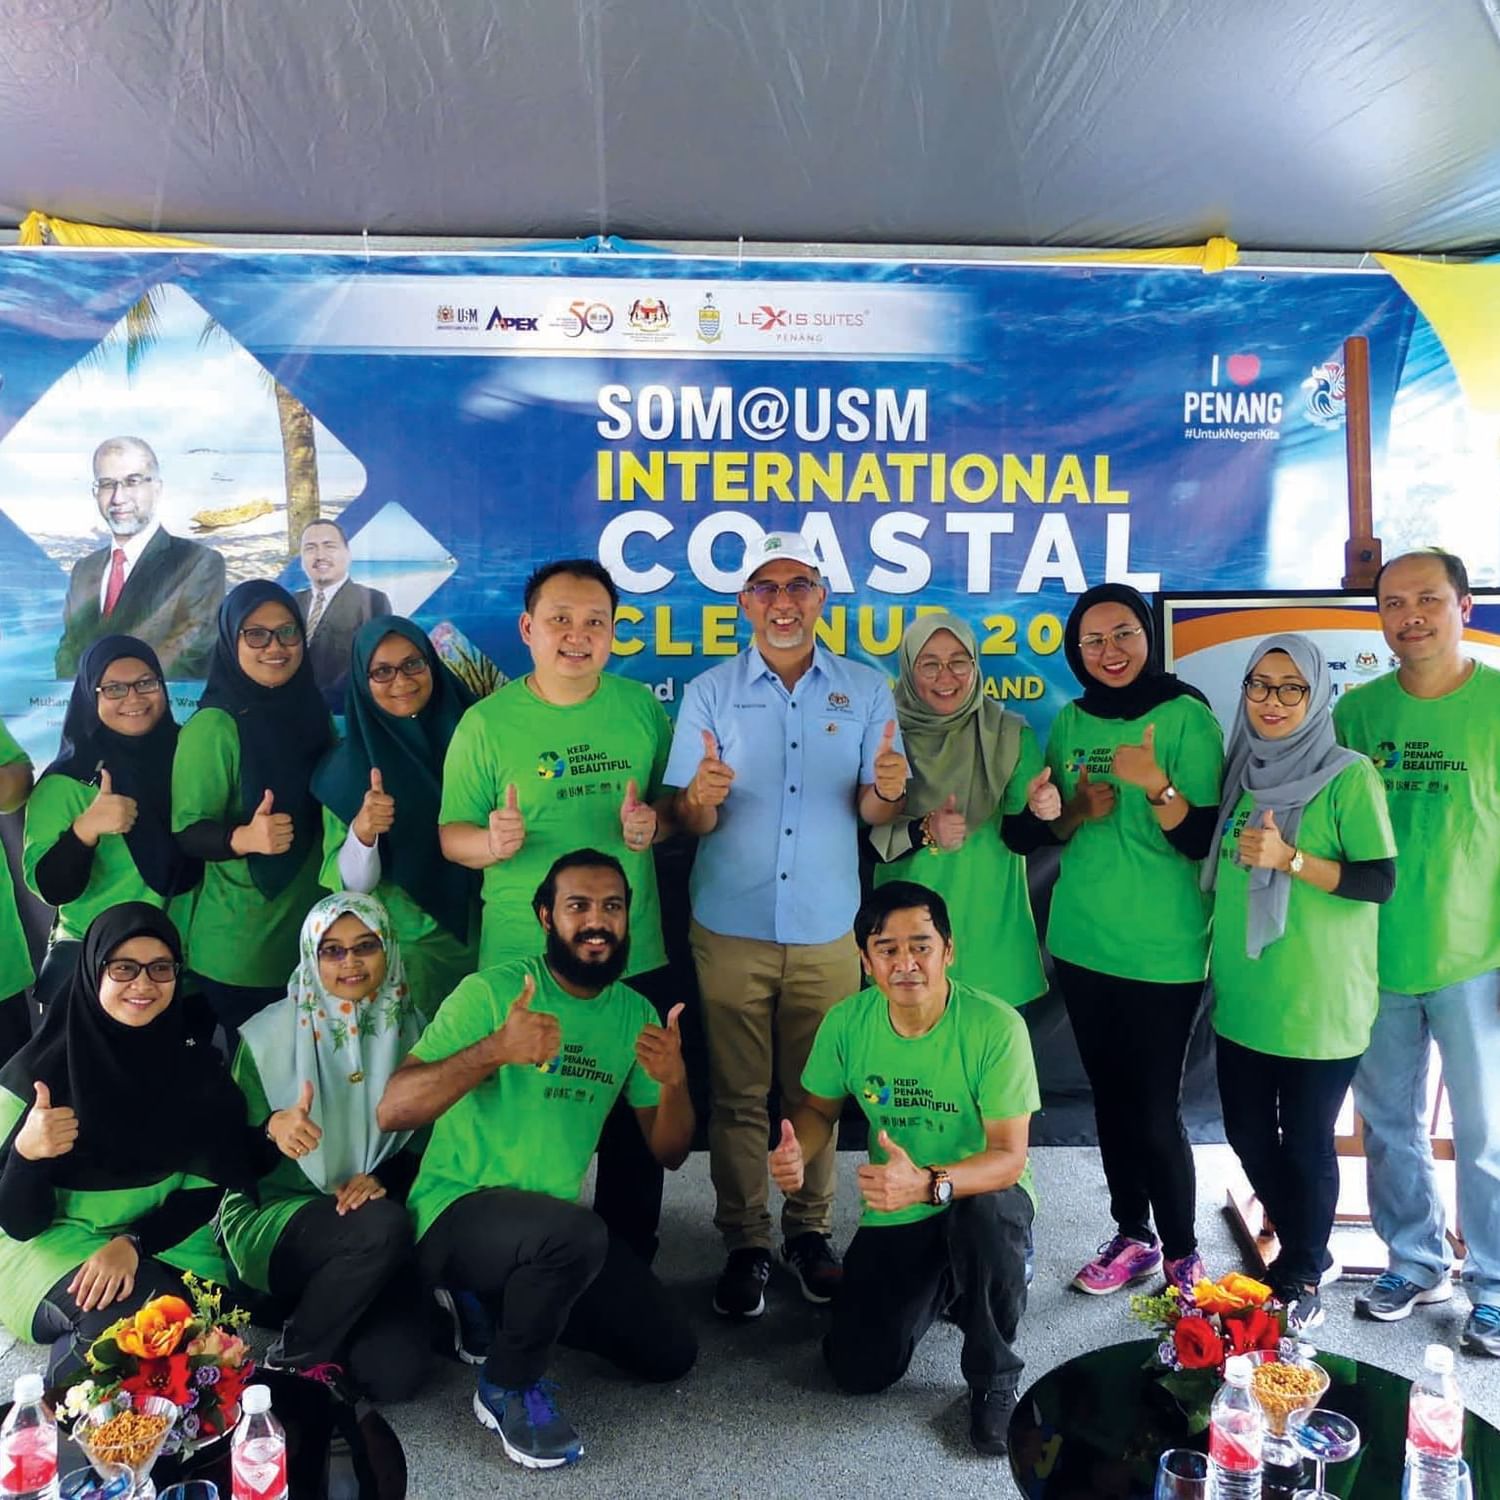 CSR 2019 - International Coastal Cleanup Day | Lexis Suites® Penang